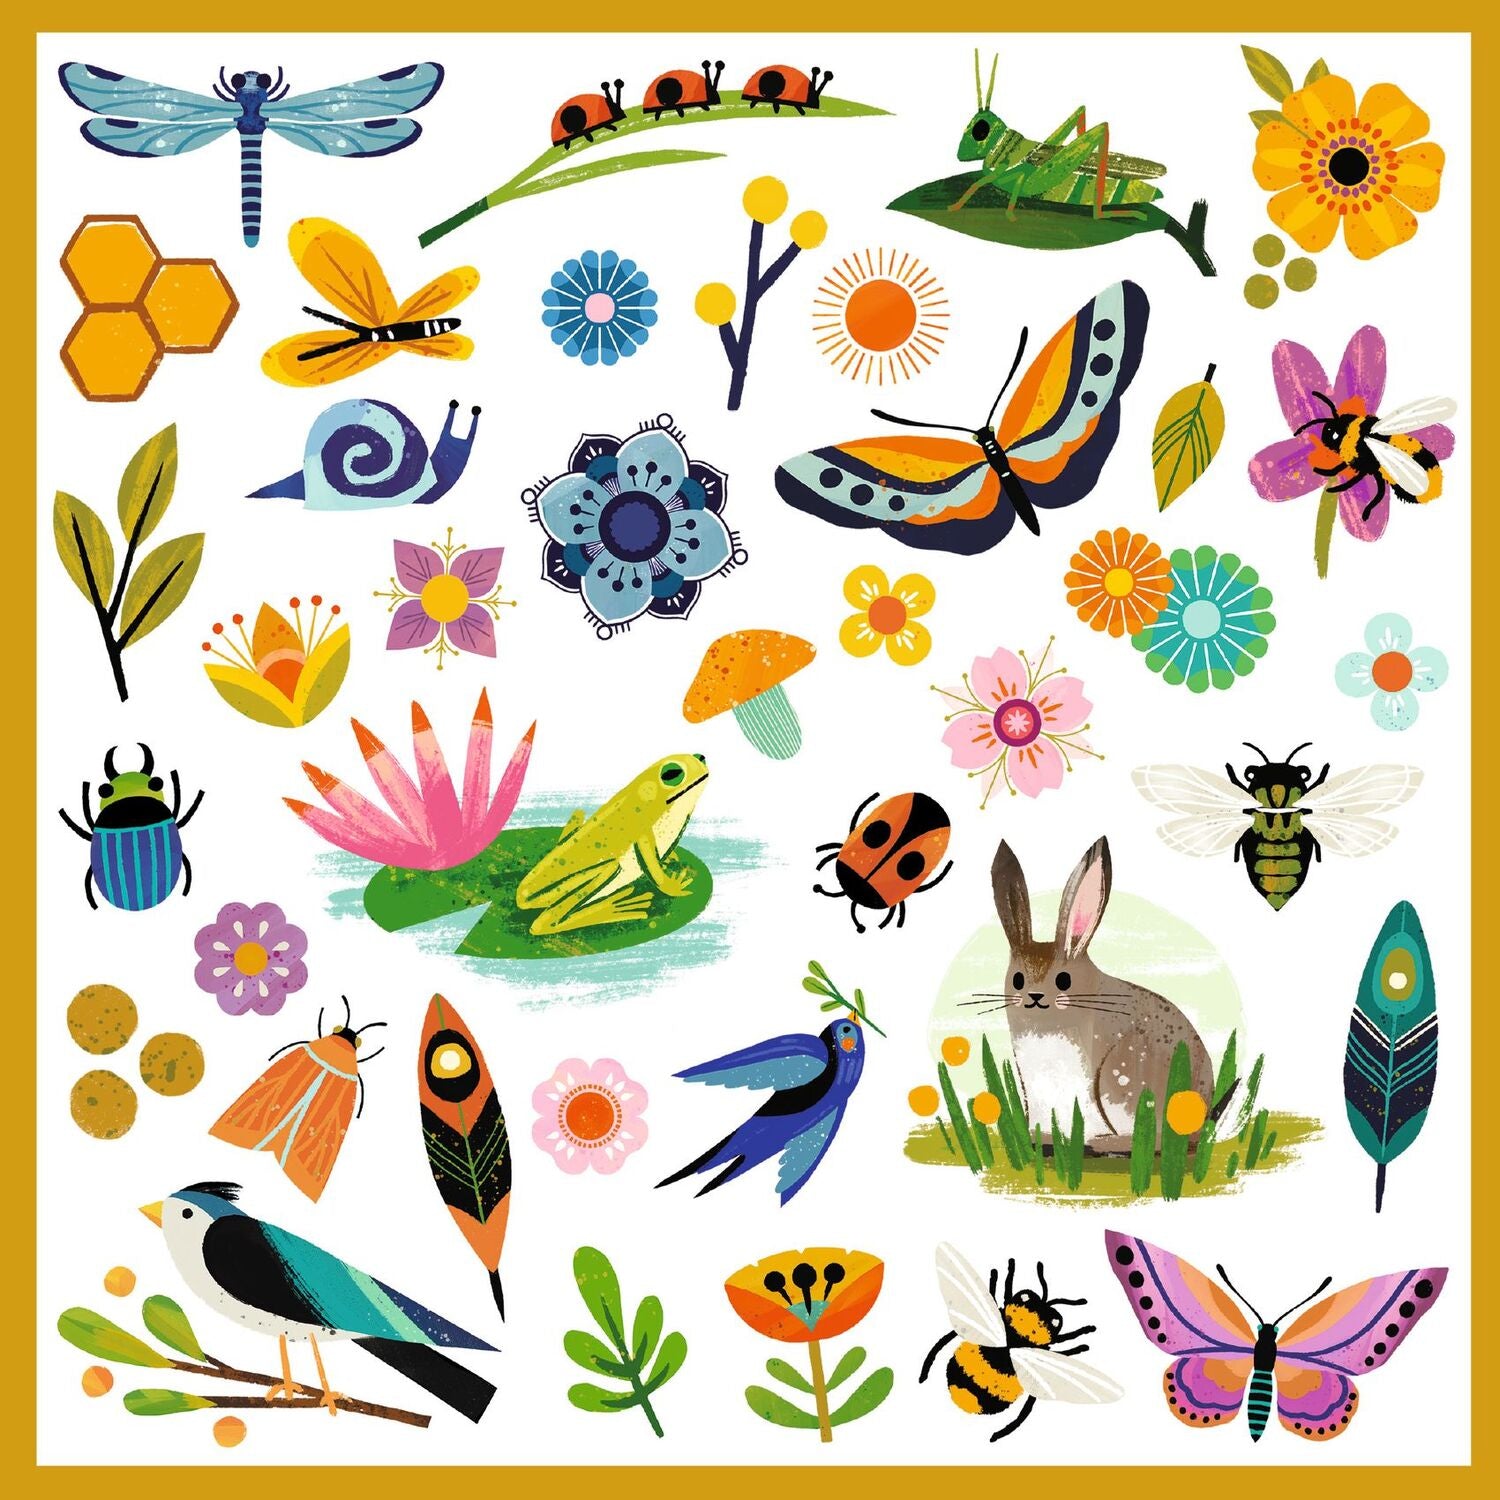 DJECO Garden Sticker Sheets